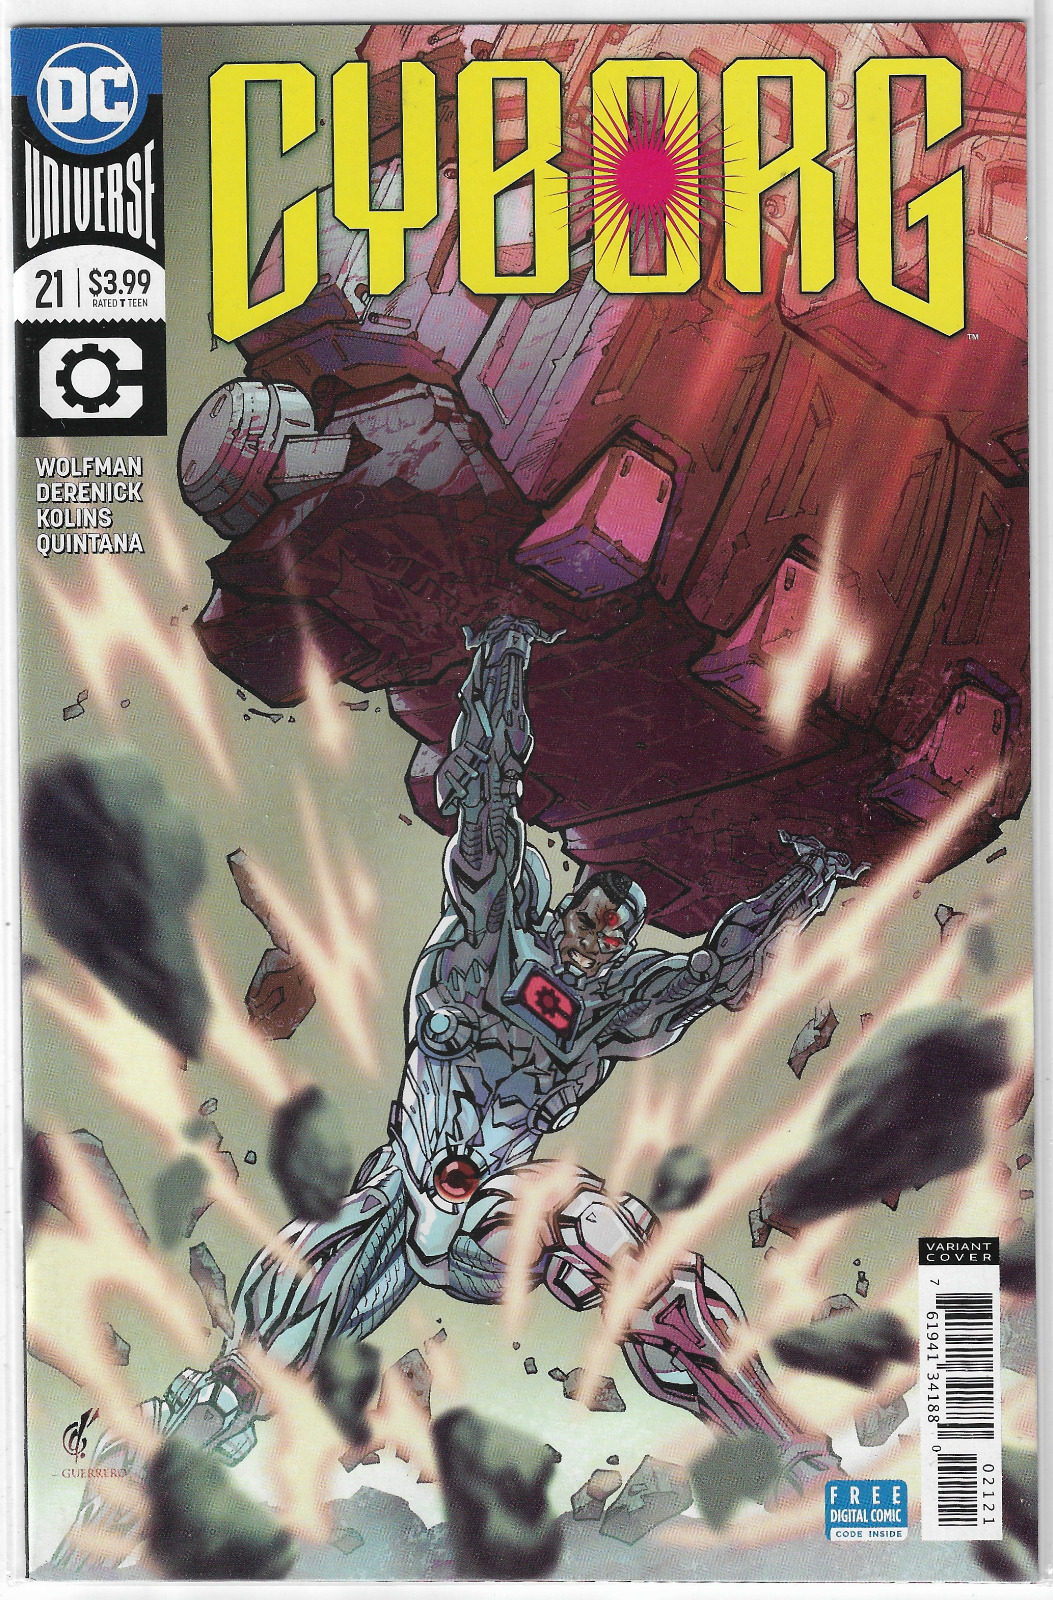 Cyborg (2018) #21 DC Comics Justice League